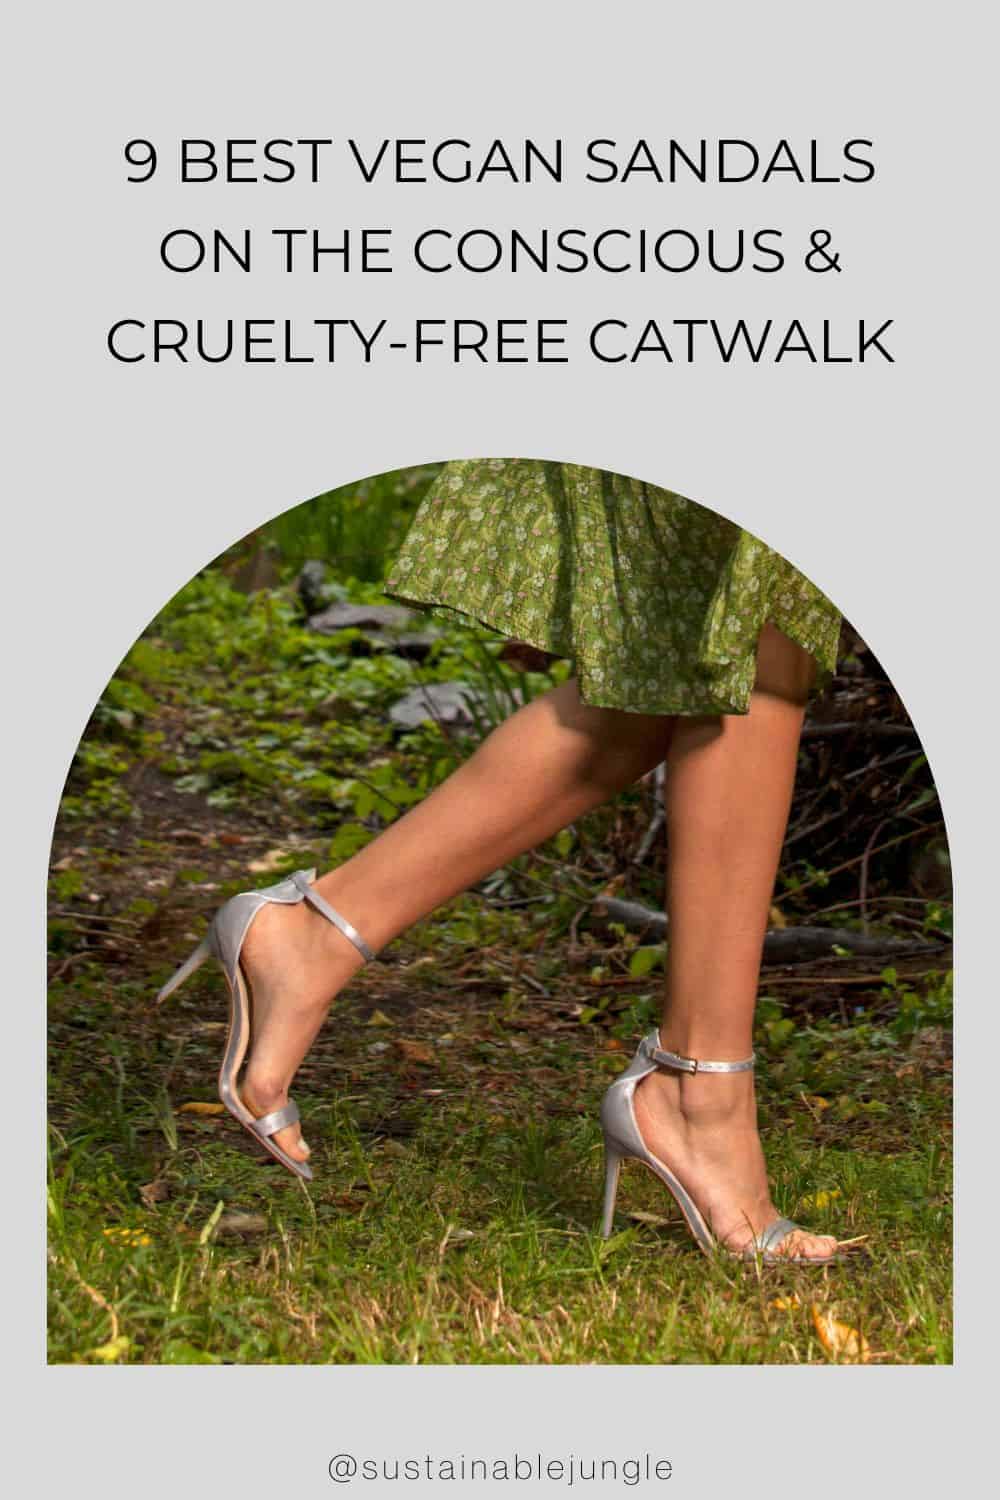 9 Best Vegan Sandals On The Conscious & Cruelty-Free Catwalk Image by VEERAH #vegansandals #bestvegansandals #vegansandalswomen #womensvegansandals #sustainablevegansandals #vegetariansandals #sustainablejungle